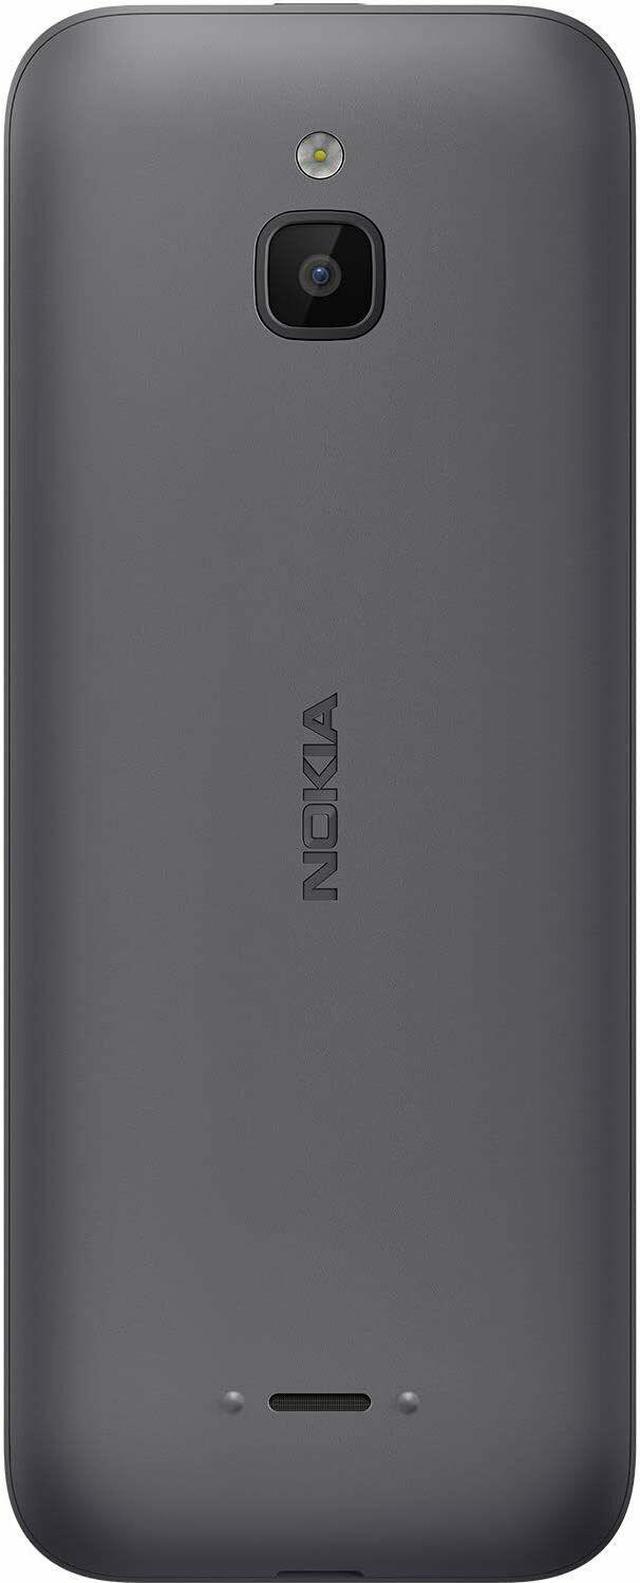 Nokia 6300 4G Dual SIM 4 GB white 512 MB RAM